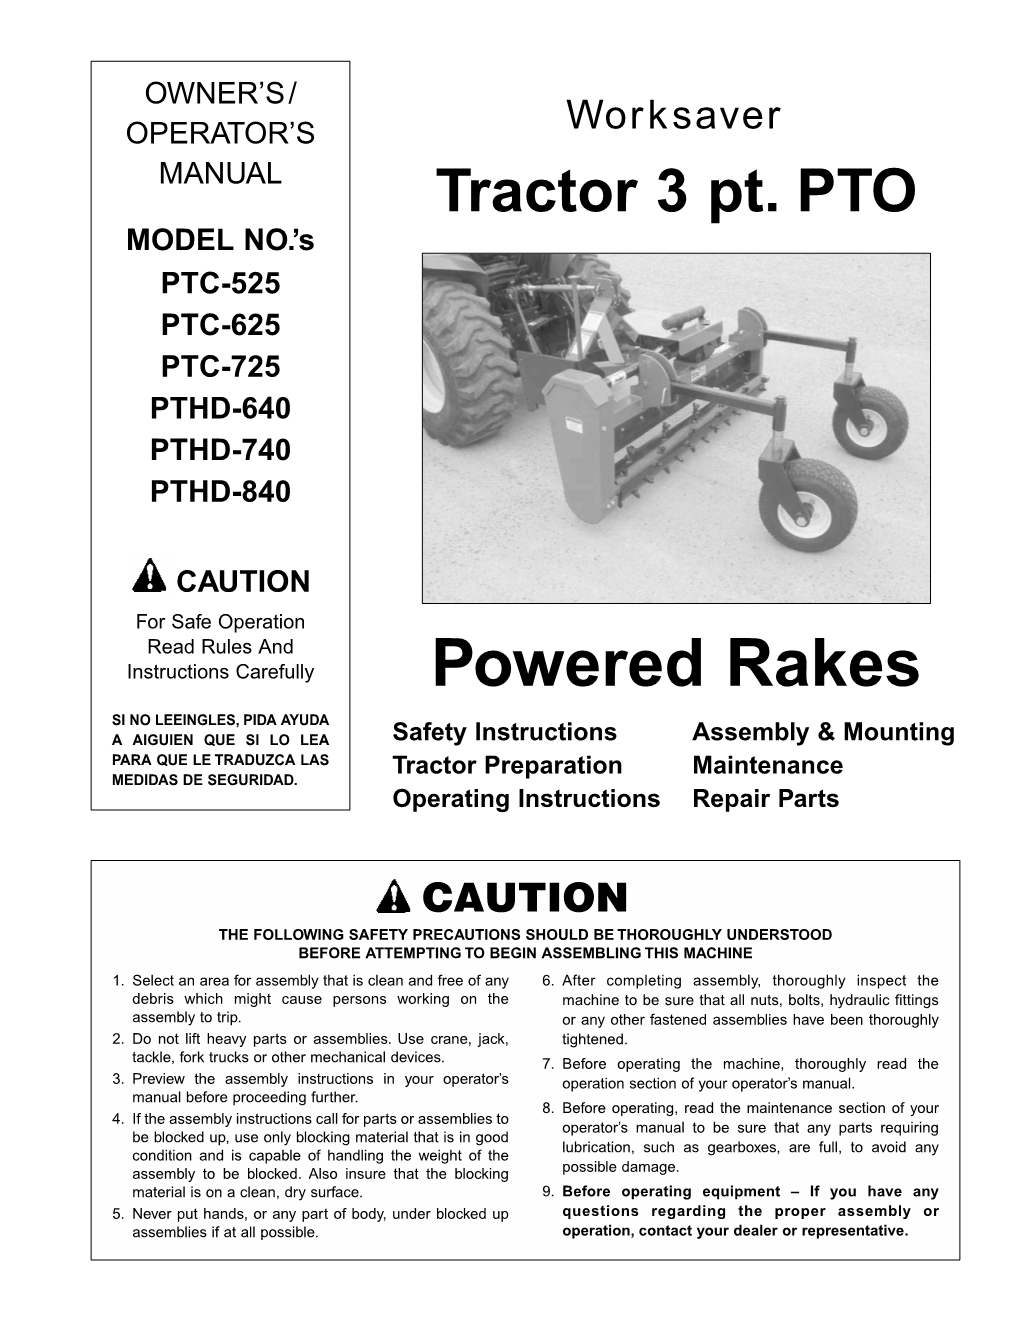 Tractor 3 Pt. PTO Powered Rakes Manual